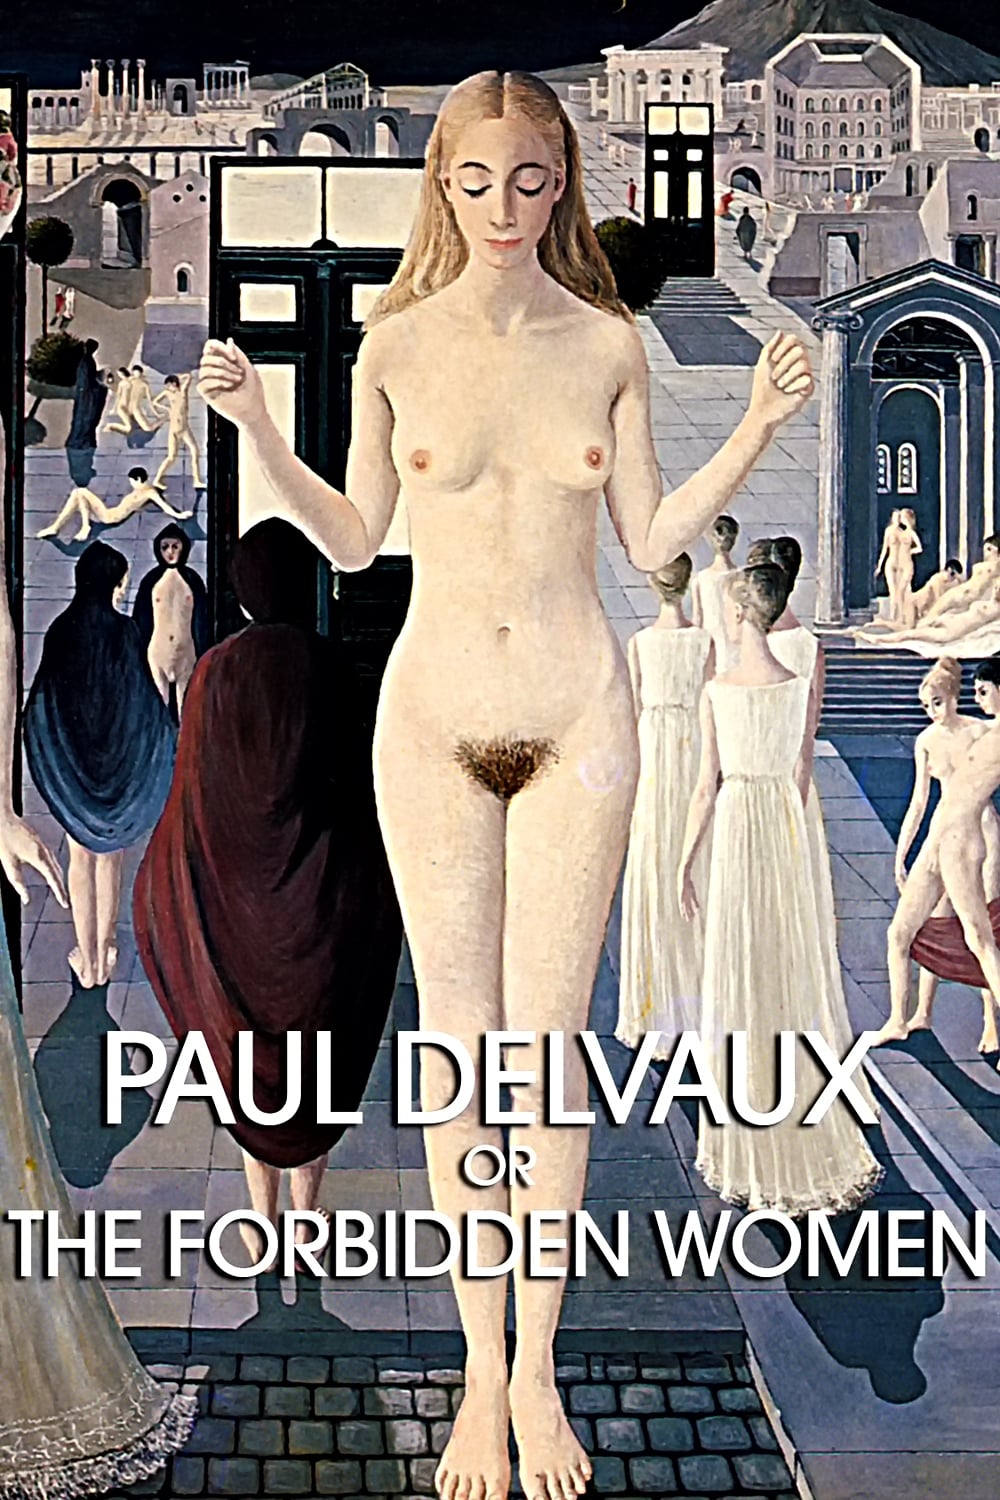 Paul Delvaux or the Forbidden Women